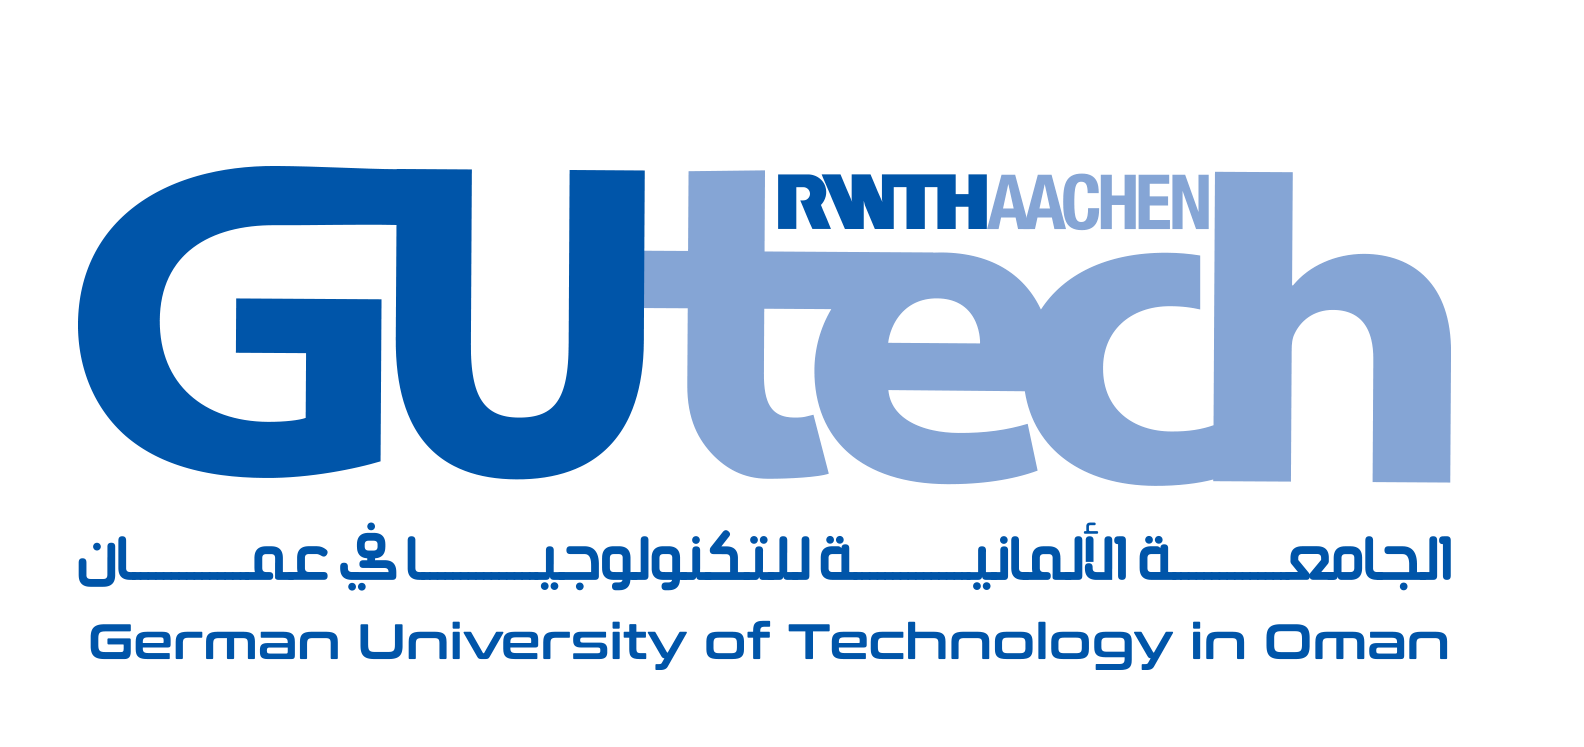 GUtech_logo